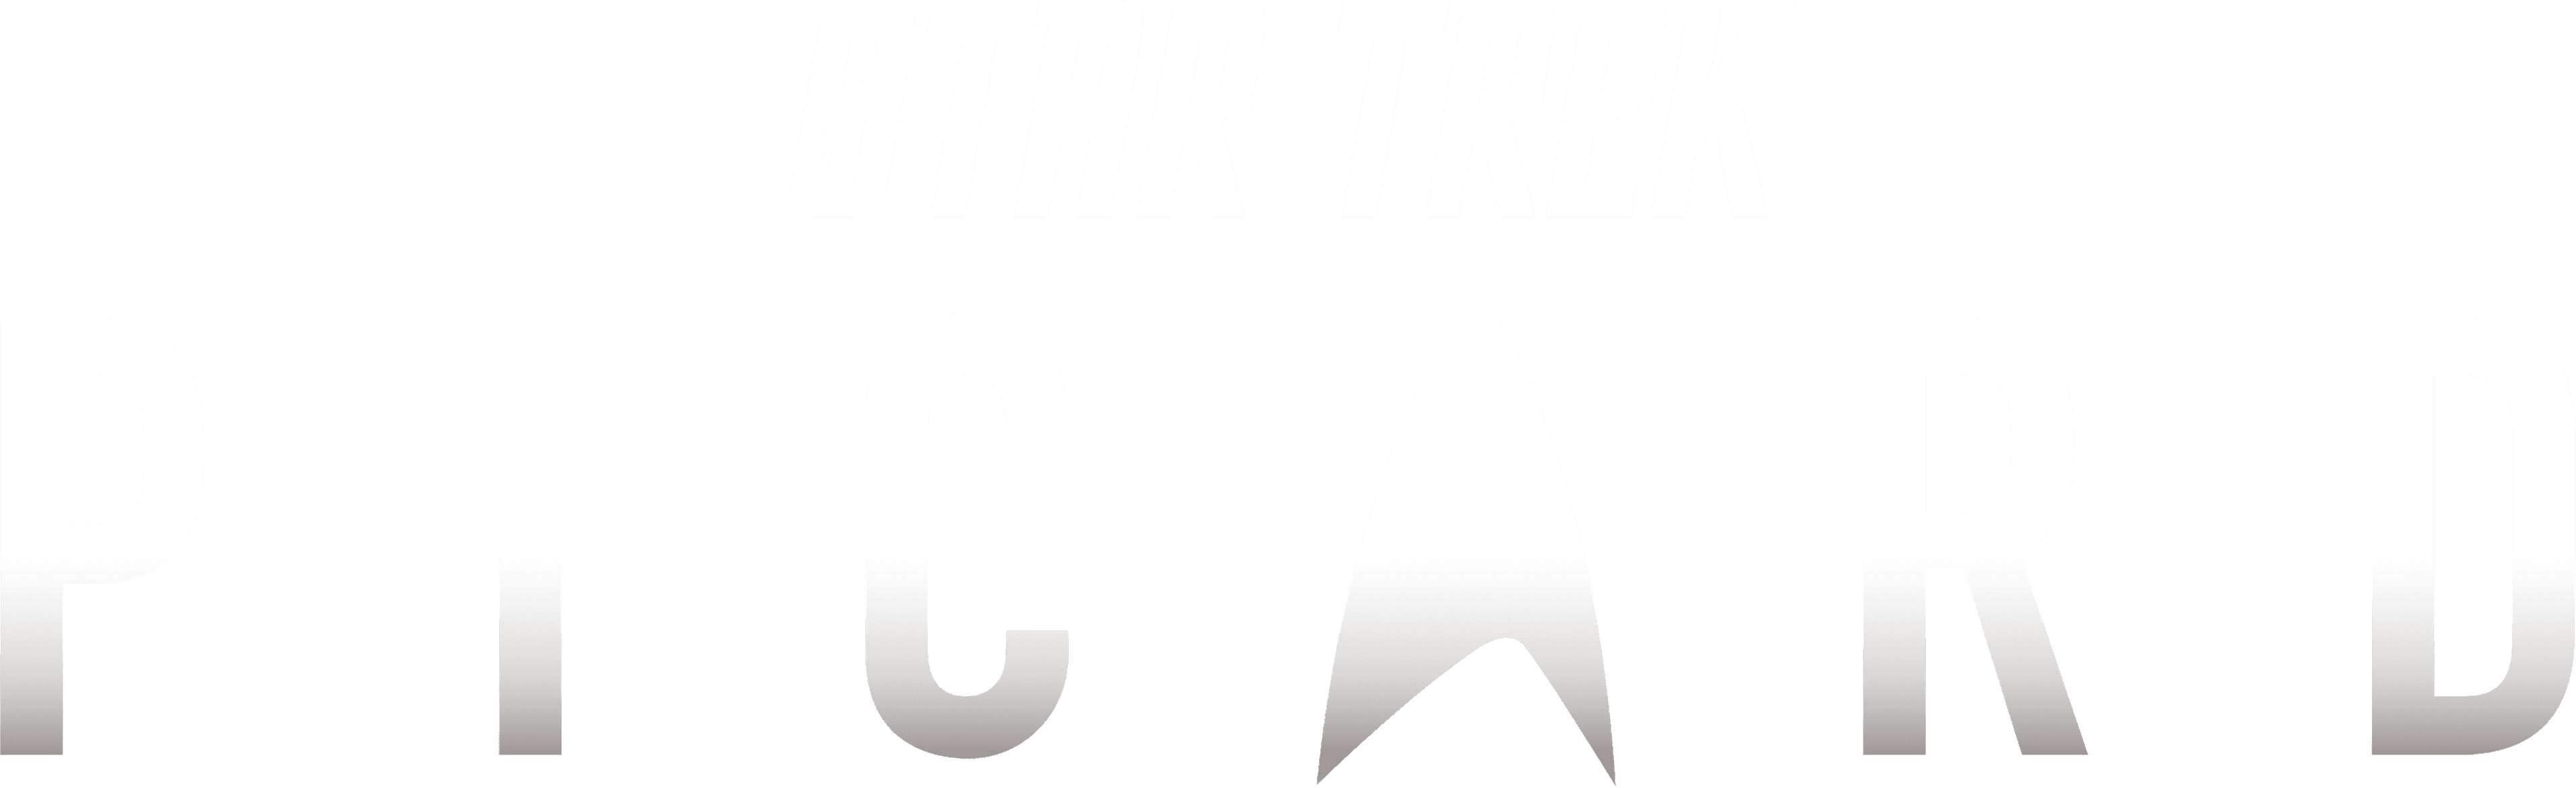 Star Trek: Picard logo